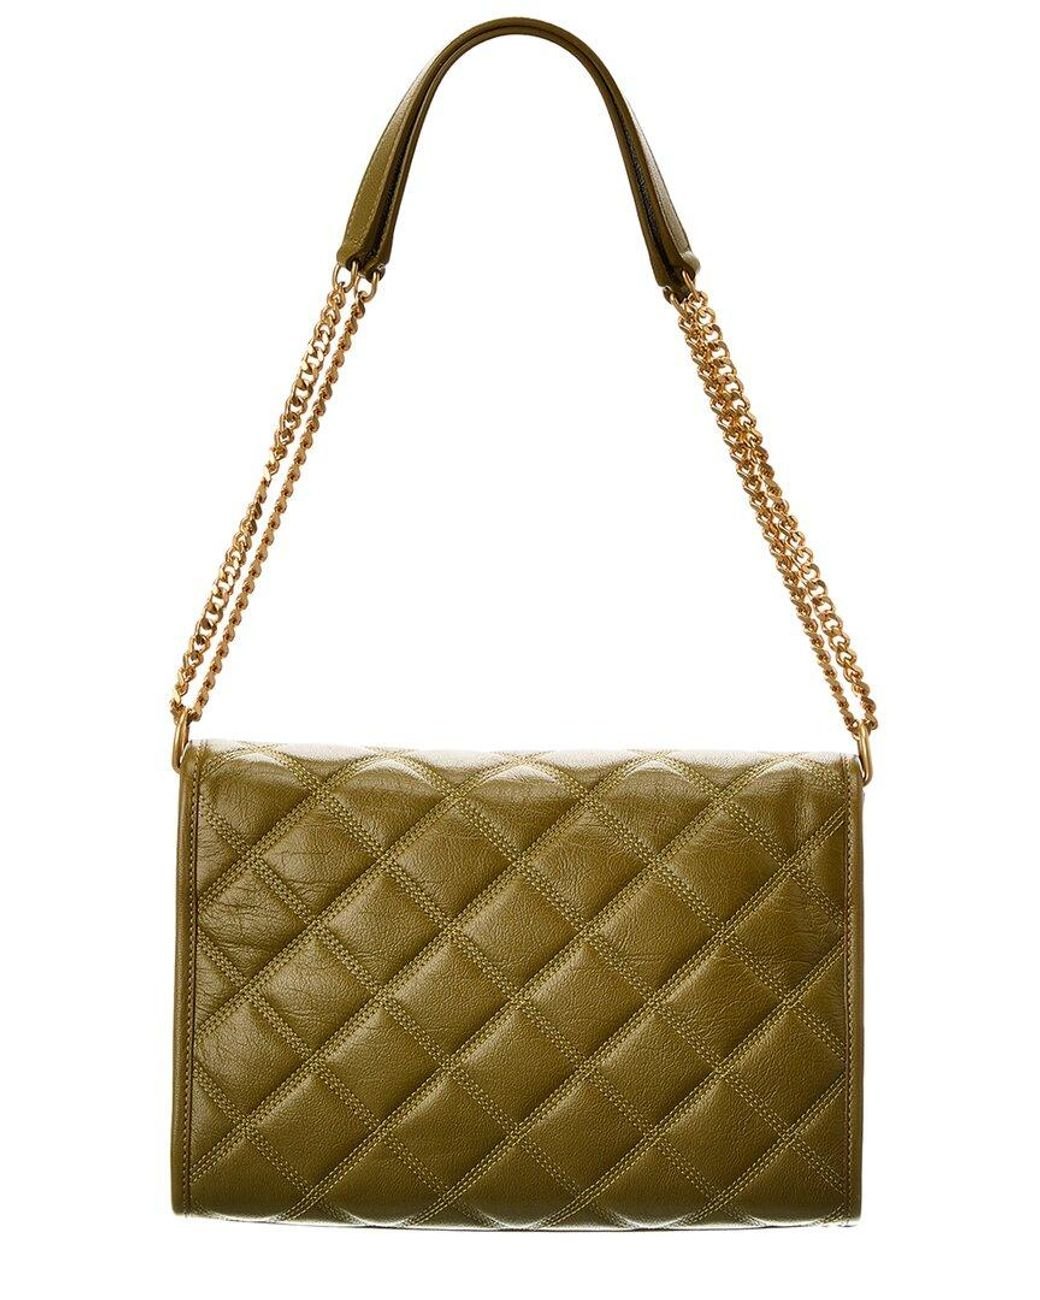 Saint Laurent Becky Mini Leather Shoulder Bag in Green